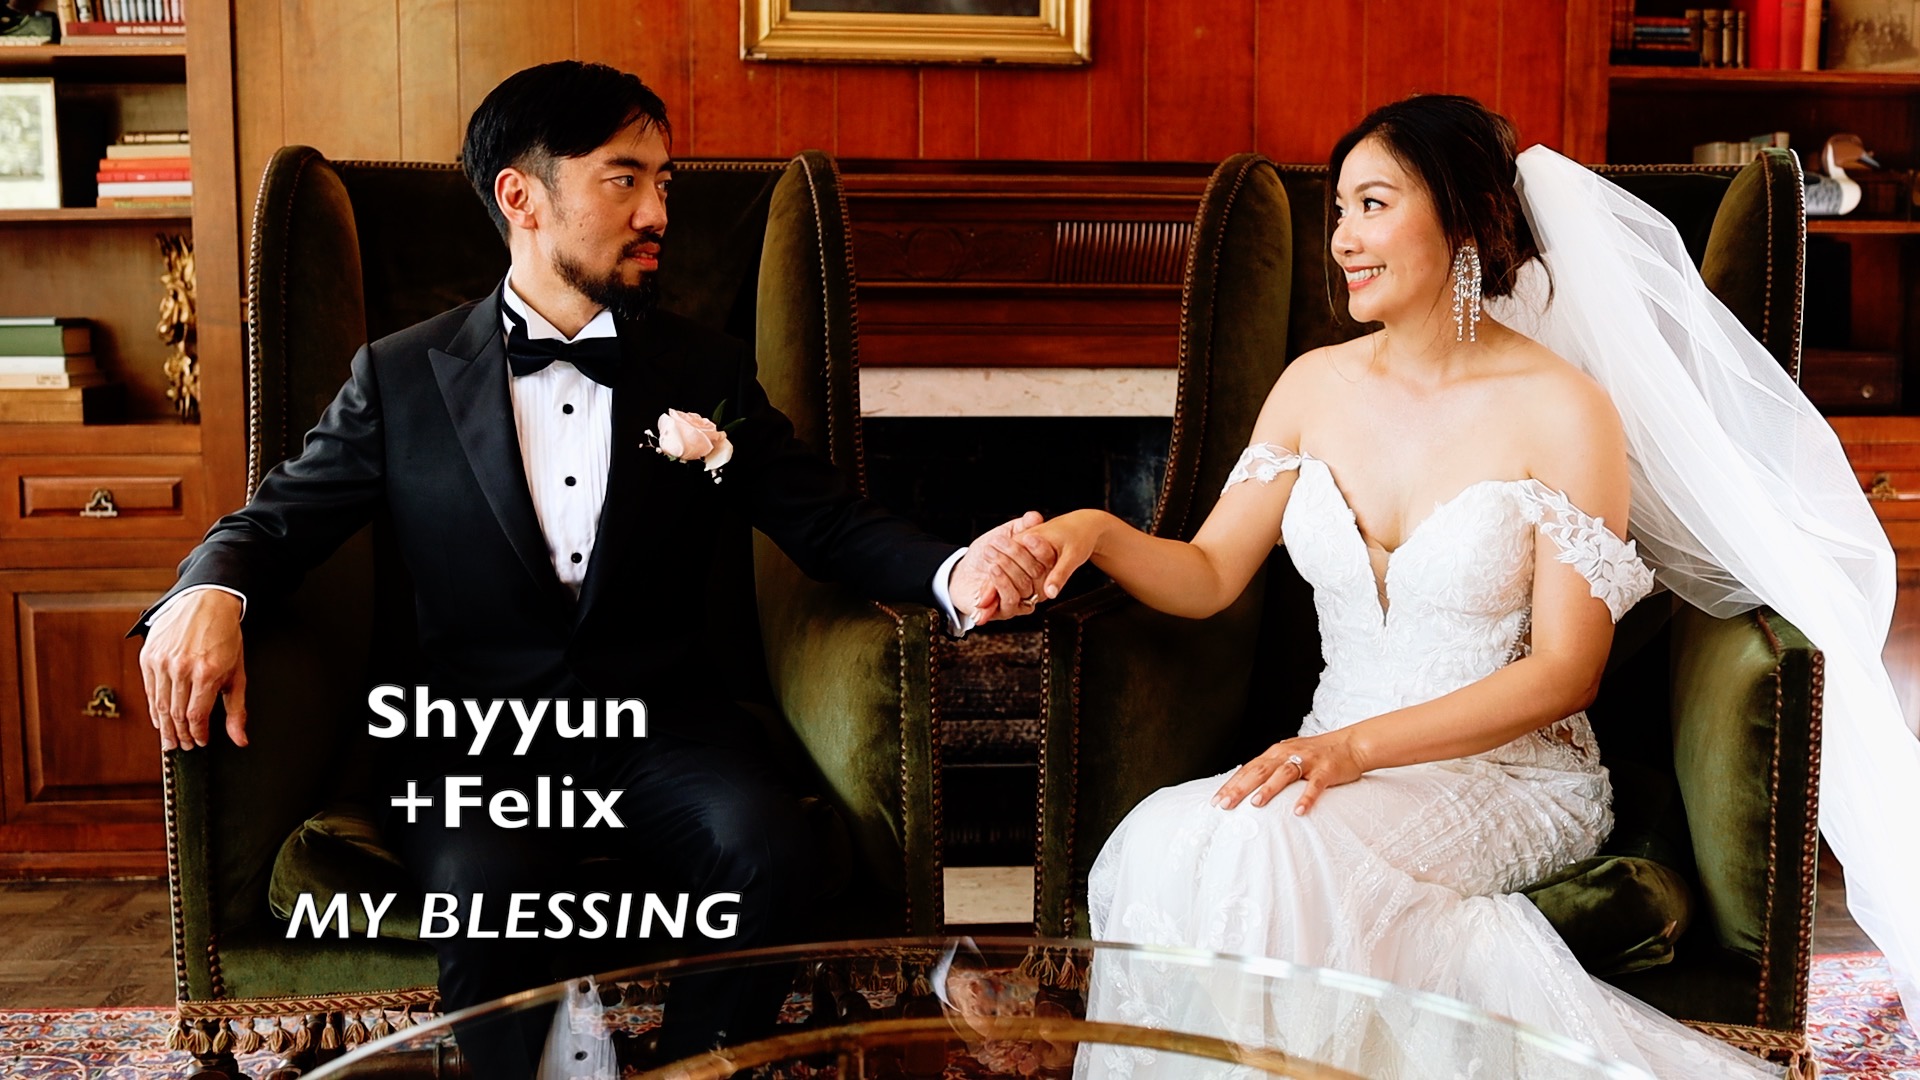 Shyyun and Felix